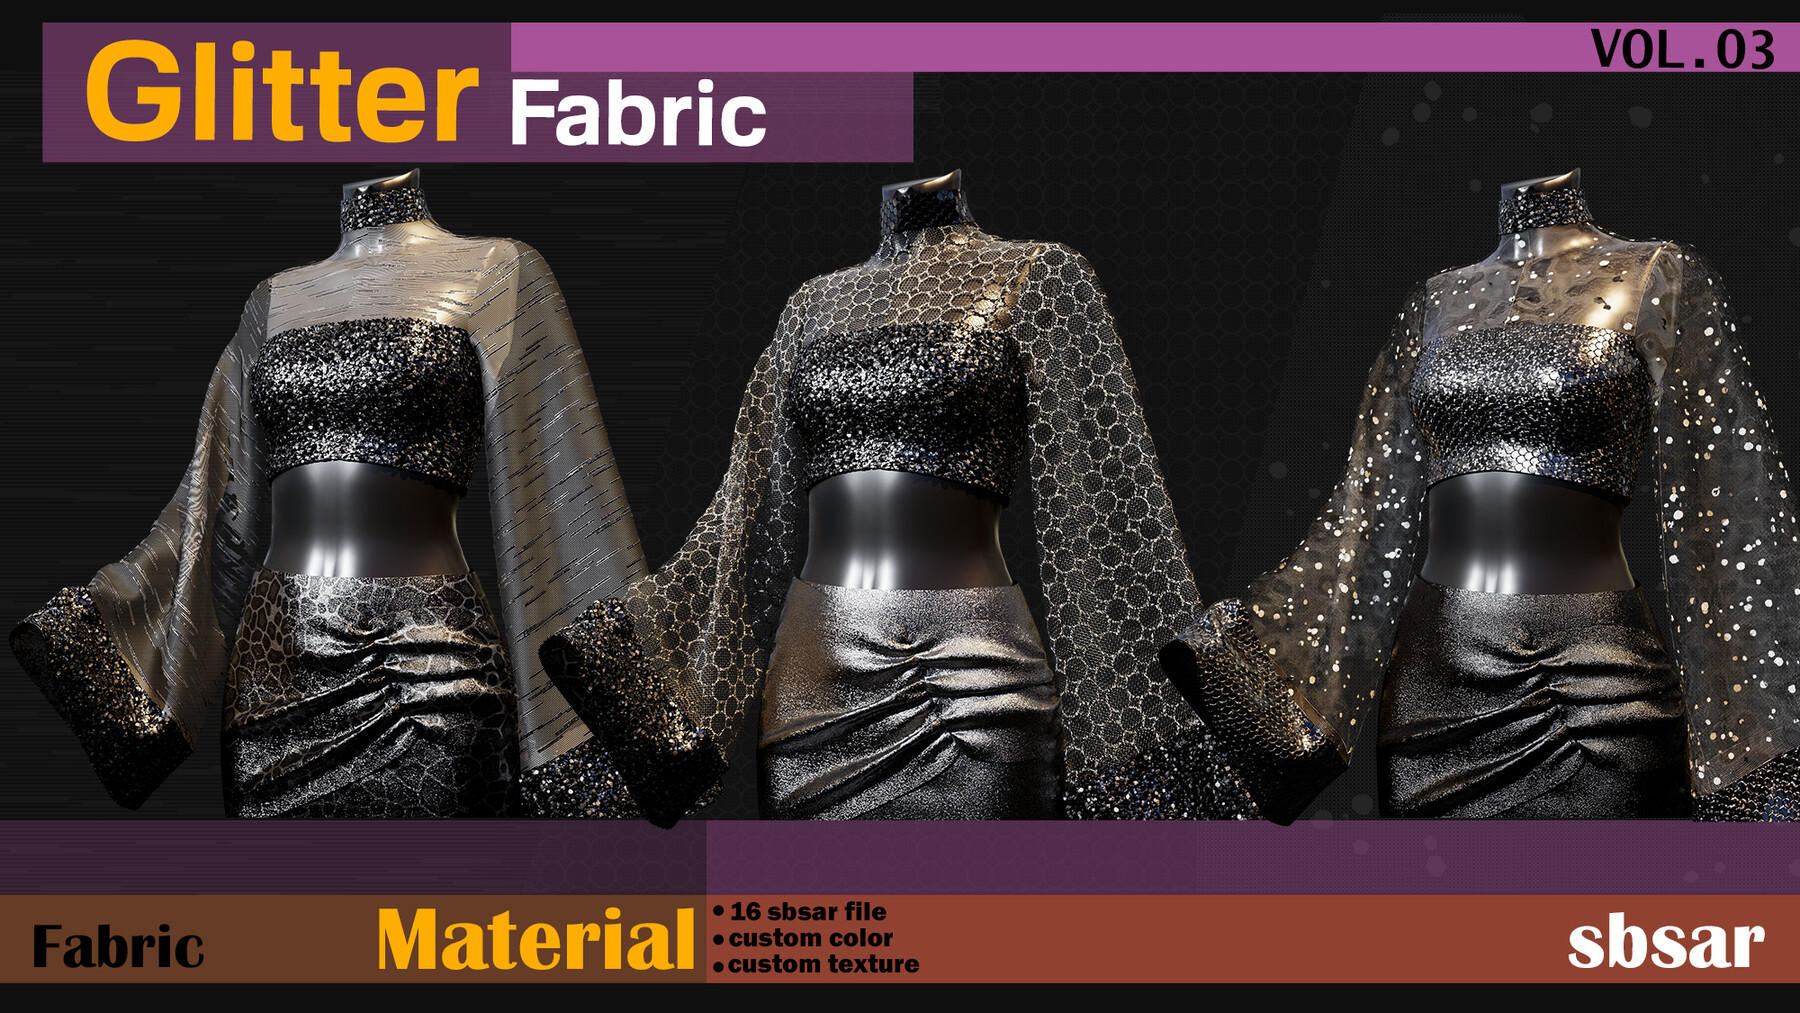 ArtStation - Glitter Fabric Material -SBSAR -custom color -custom fabric  texture -VOL 03